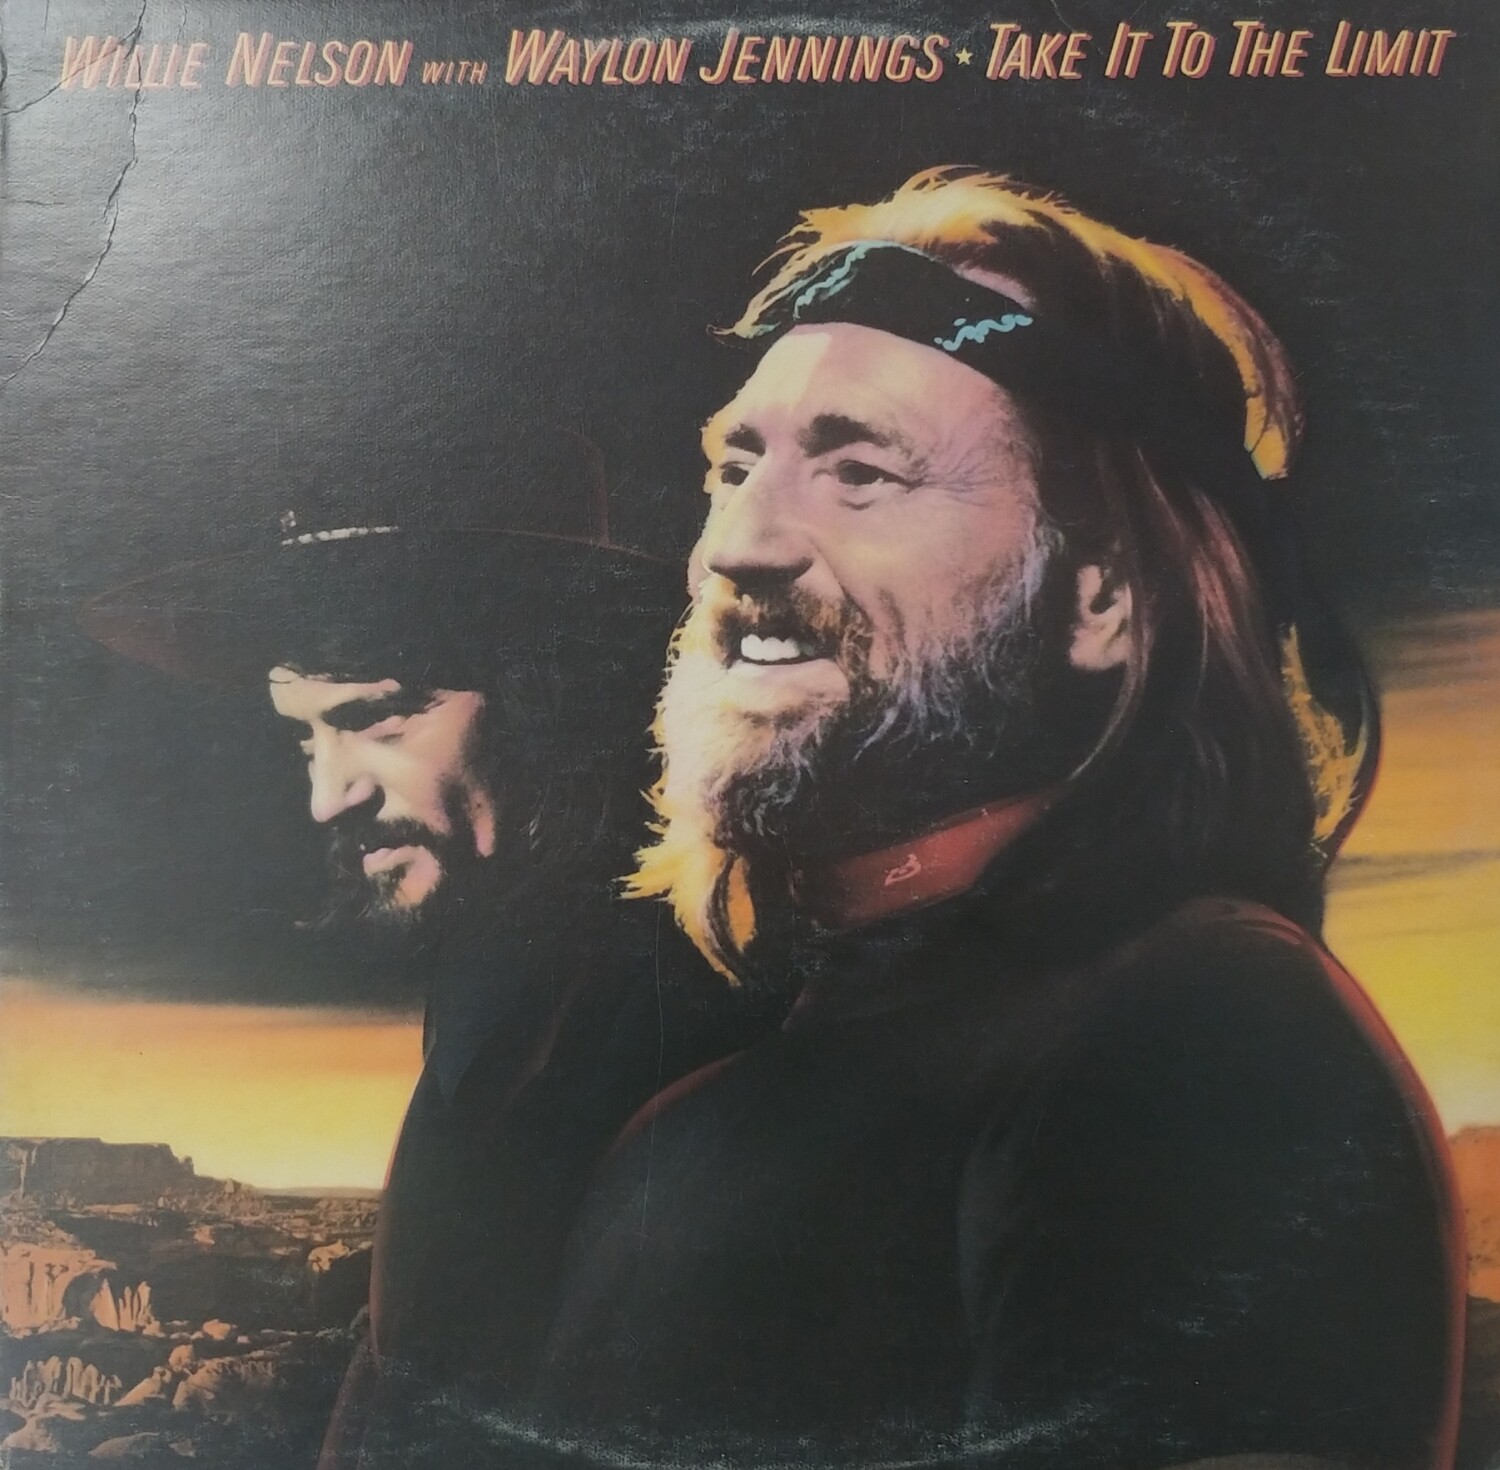 Willie Nelson & Waylon Jennings - Take it to the limit